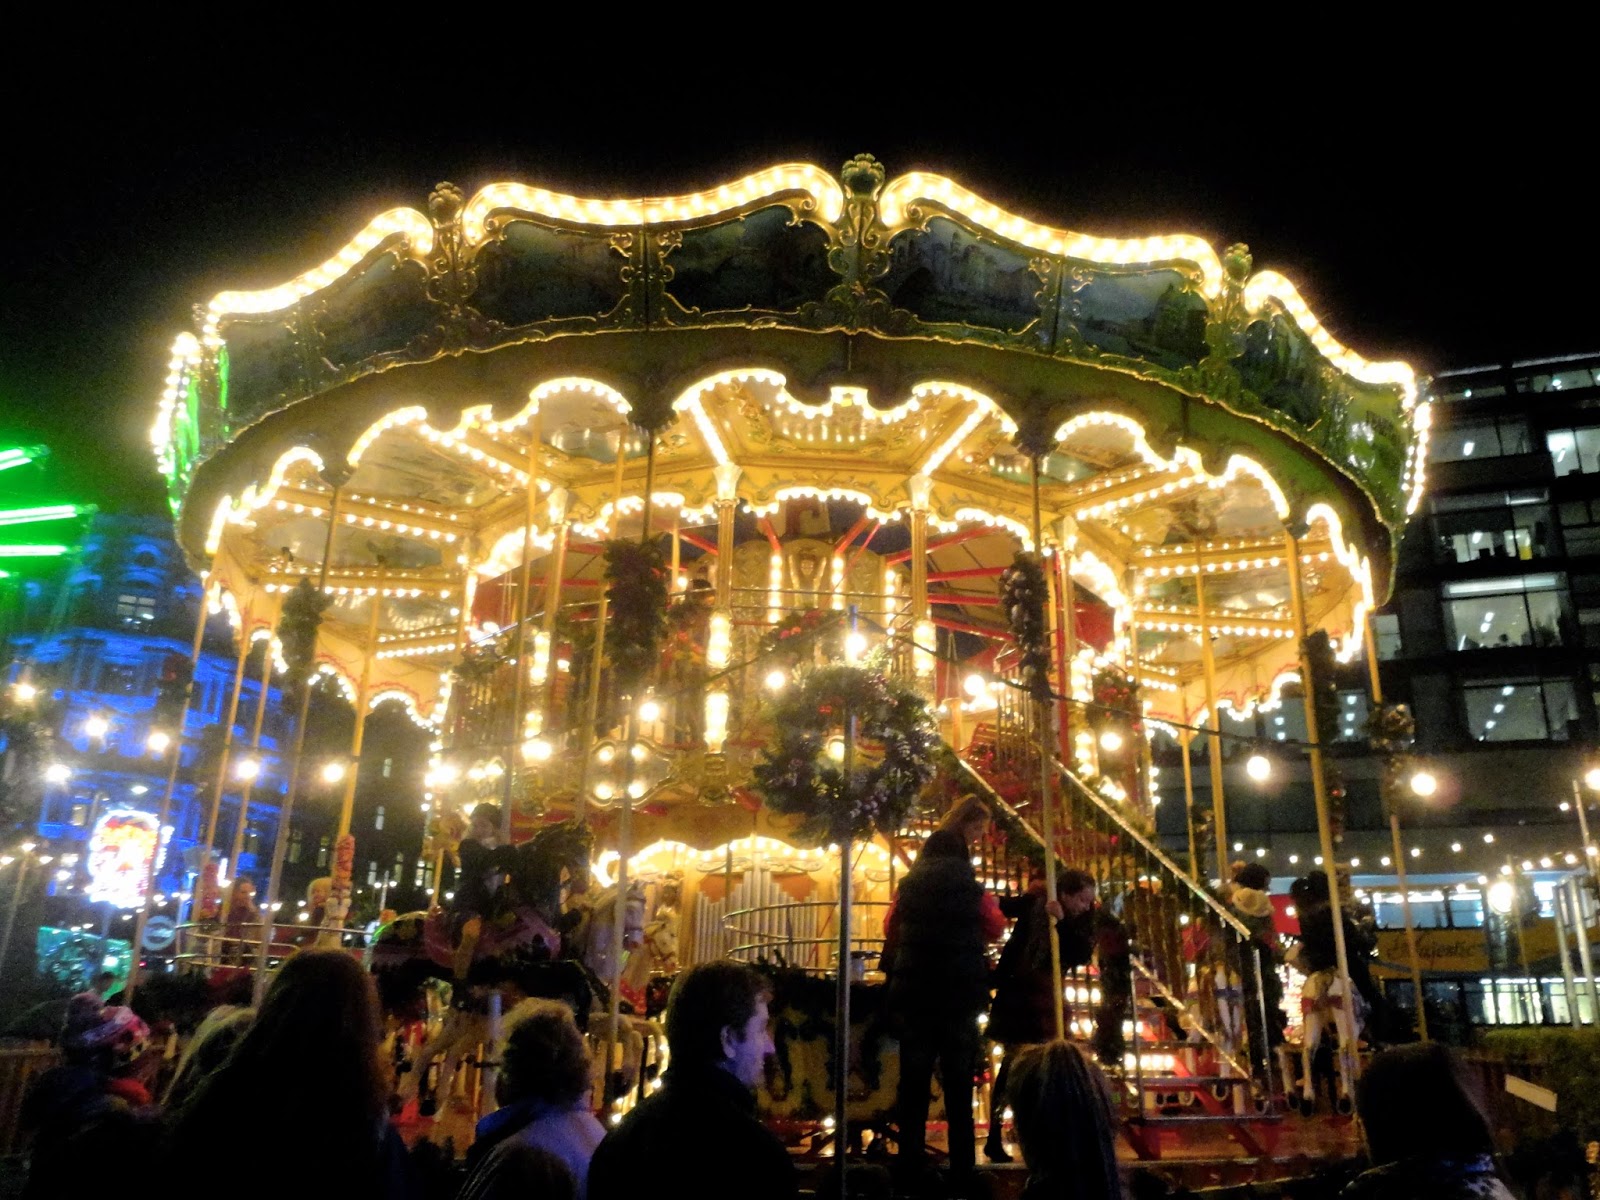 Carousel in Edinburgh's Winter Wonderland at Christmas in Princes Street Gardens